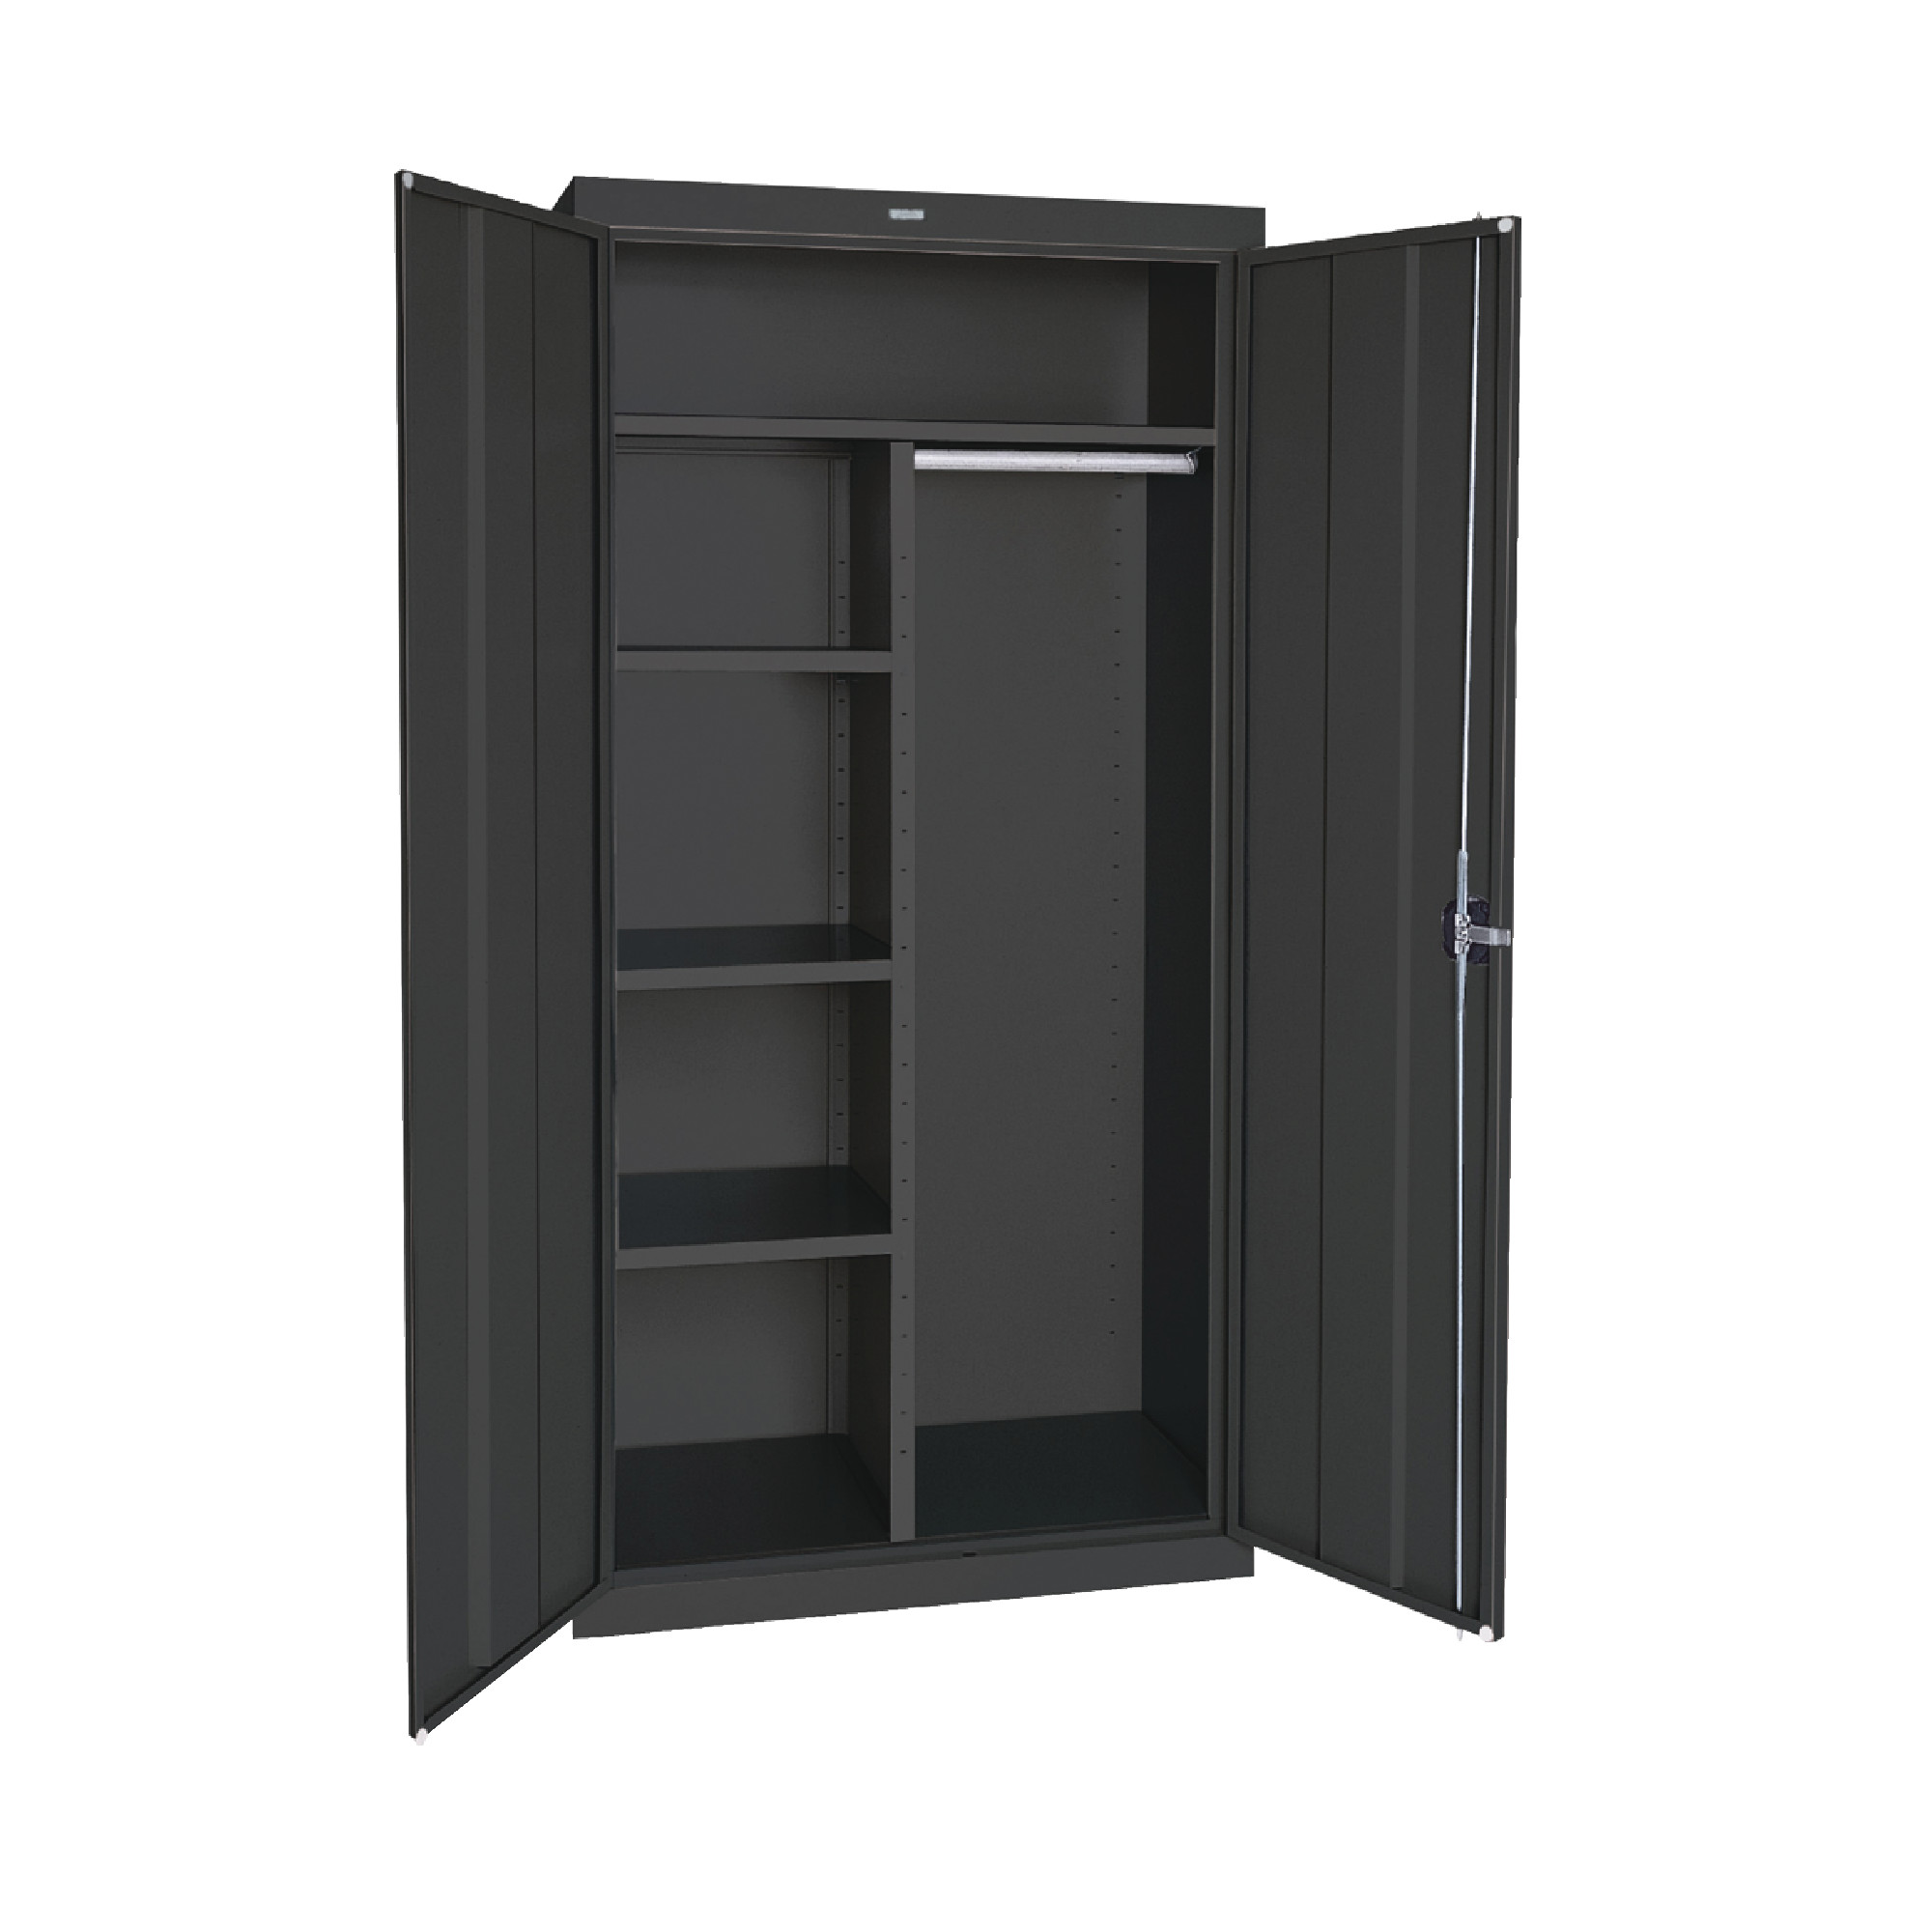 SANDUSKY 36"W x 24"D x 72"H Floor Combination Cabinet - Black